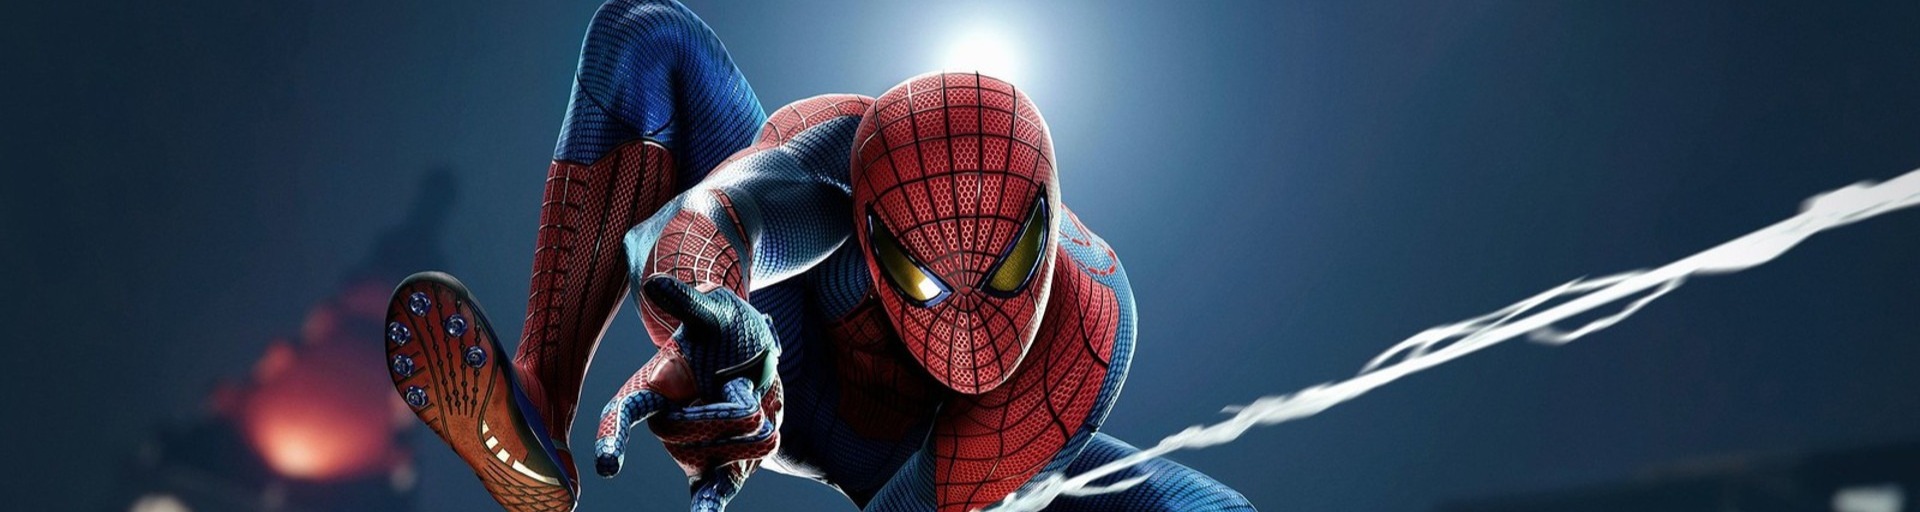 Marvel's Spider-Man - The City That Never Sleeps DLC bg